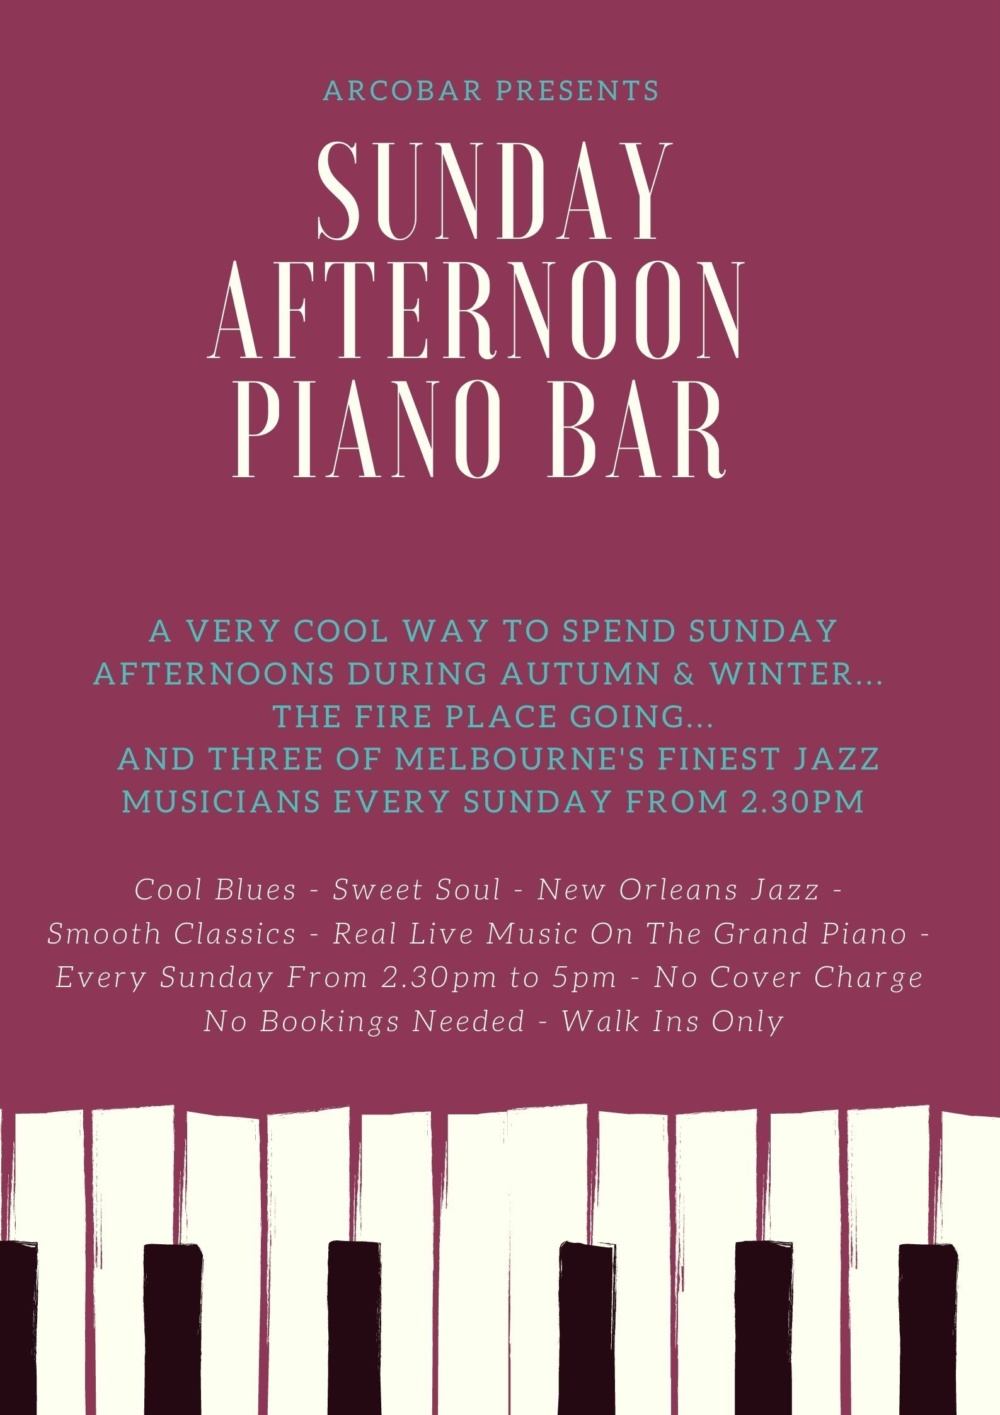 arcobar presents Sunday Afternoon Piano Bar